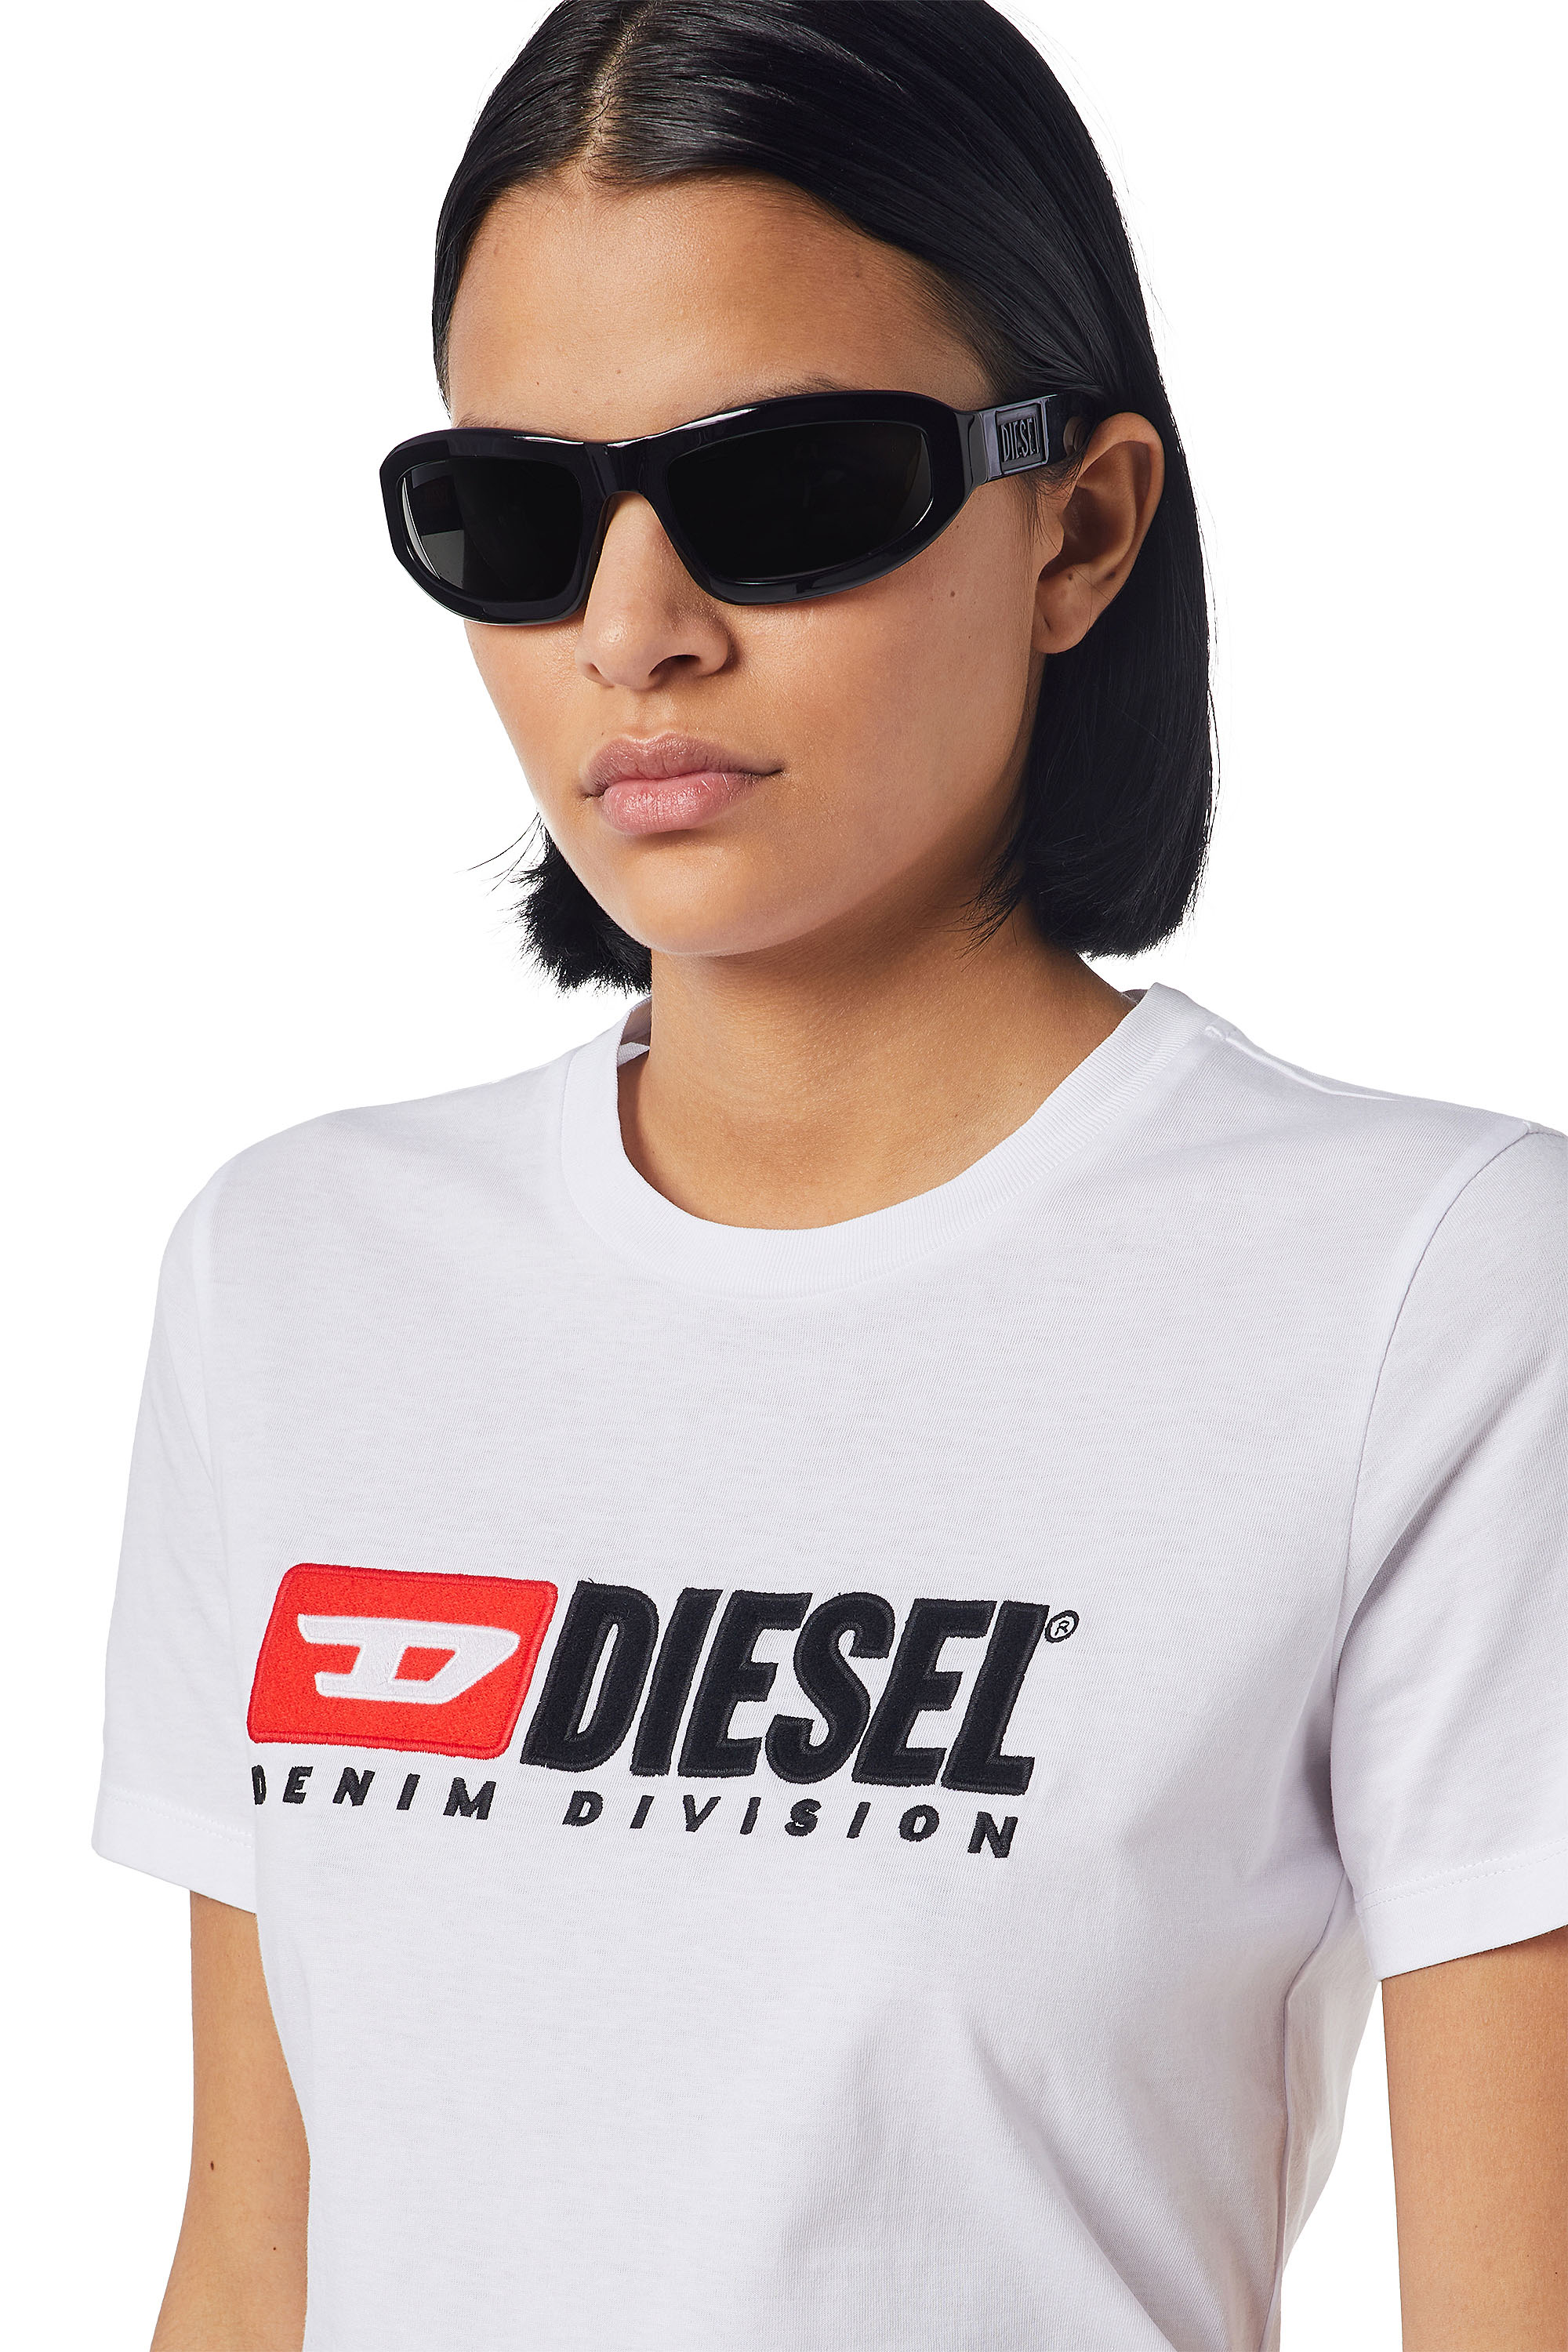 spise grøntsager Oversigt Women's basic cotton T-shirts, dresses, sweatshirts | Diesel®